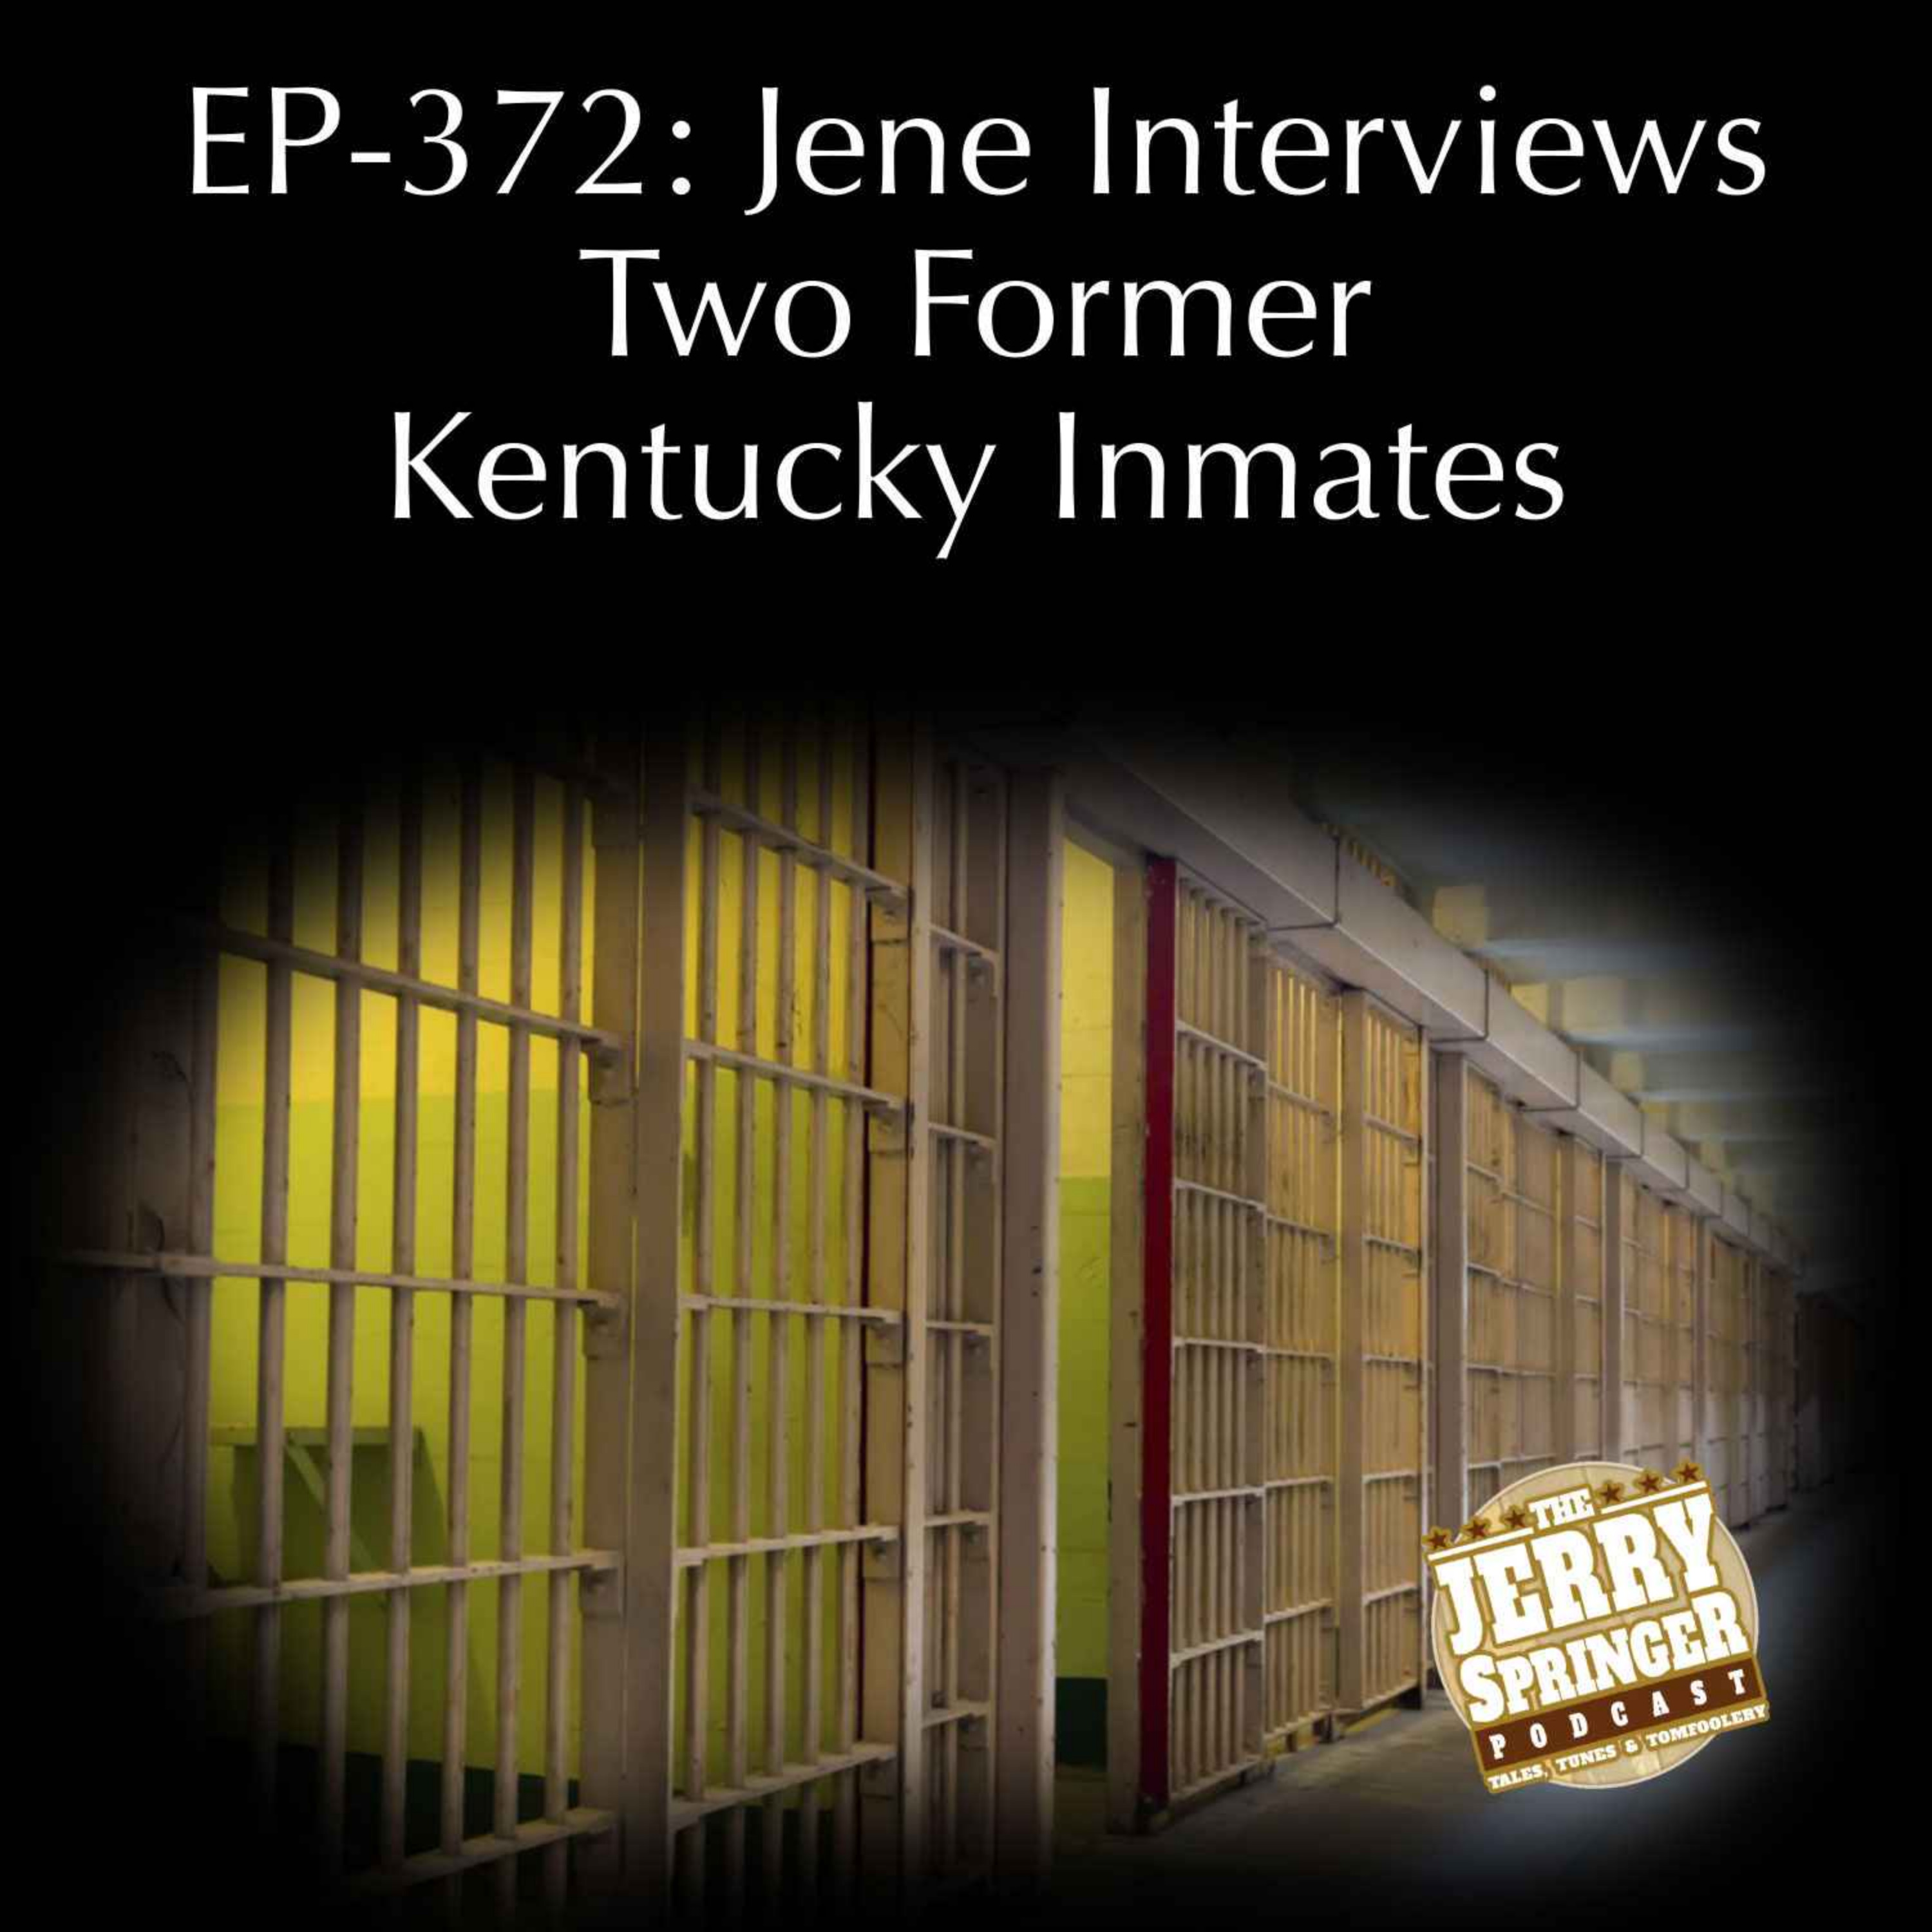 Jene Interviews Two Former Kentucky Inmates: EP-372